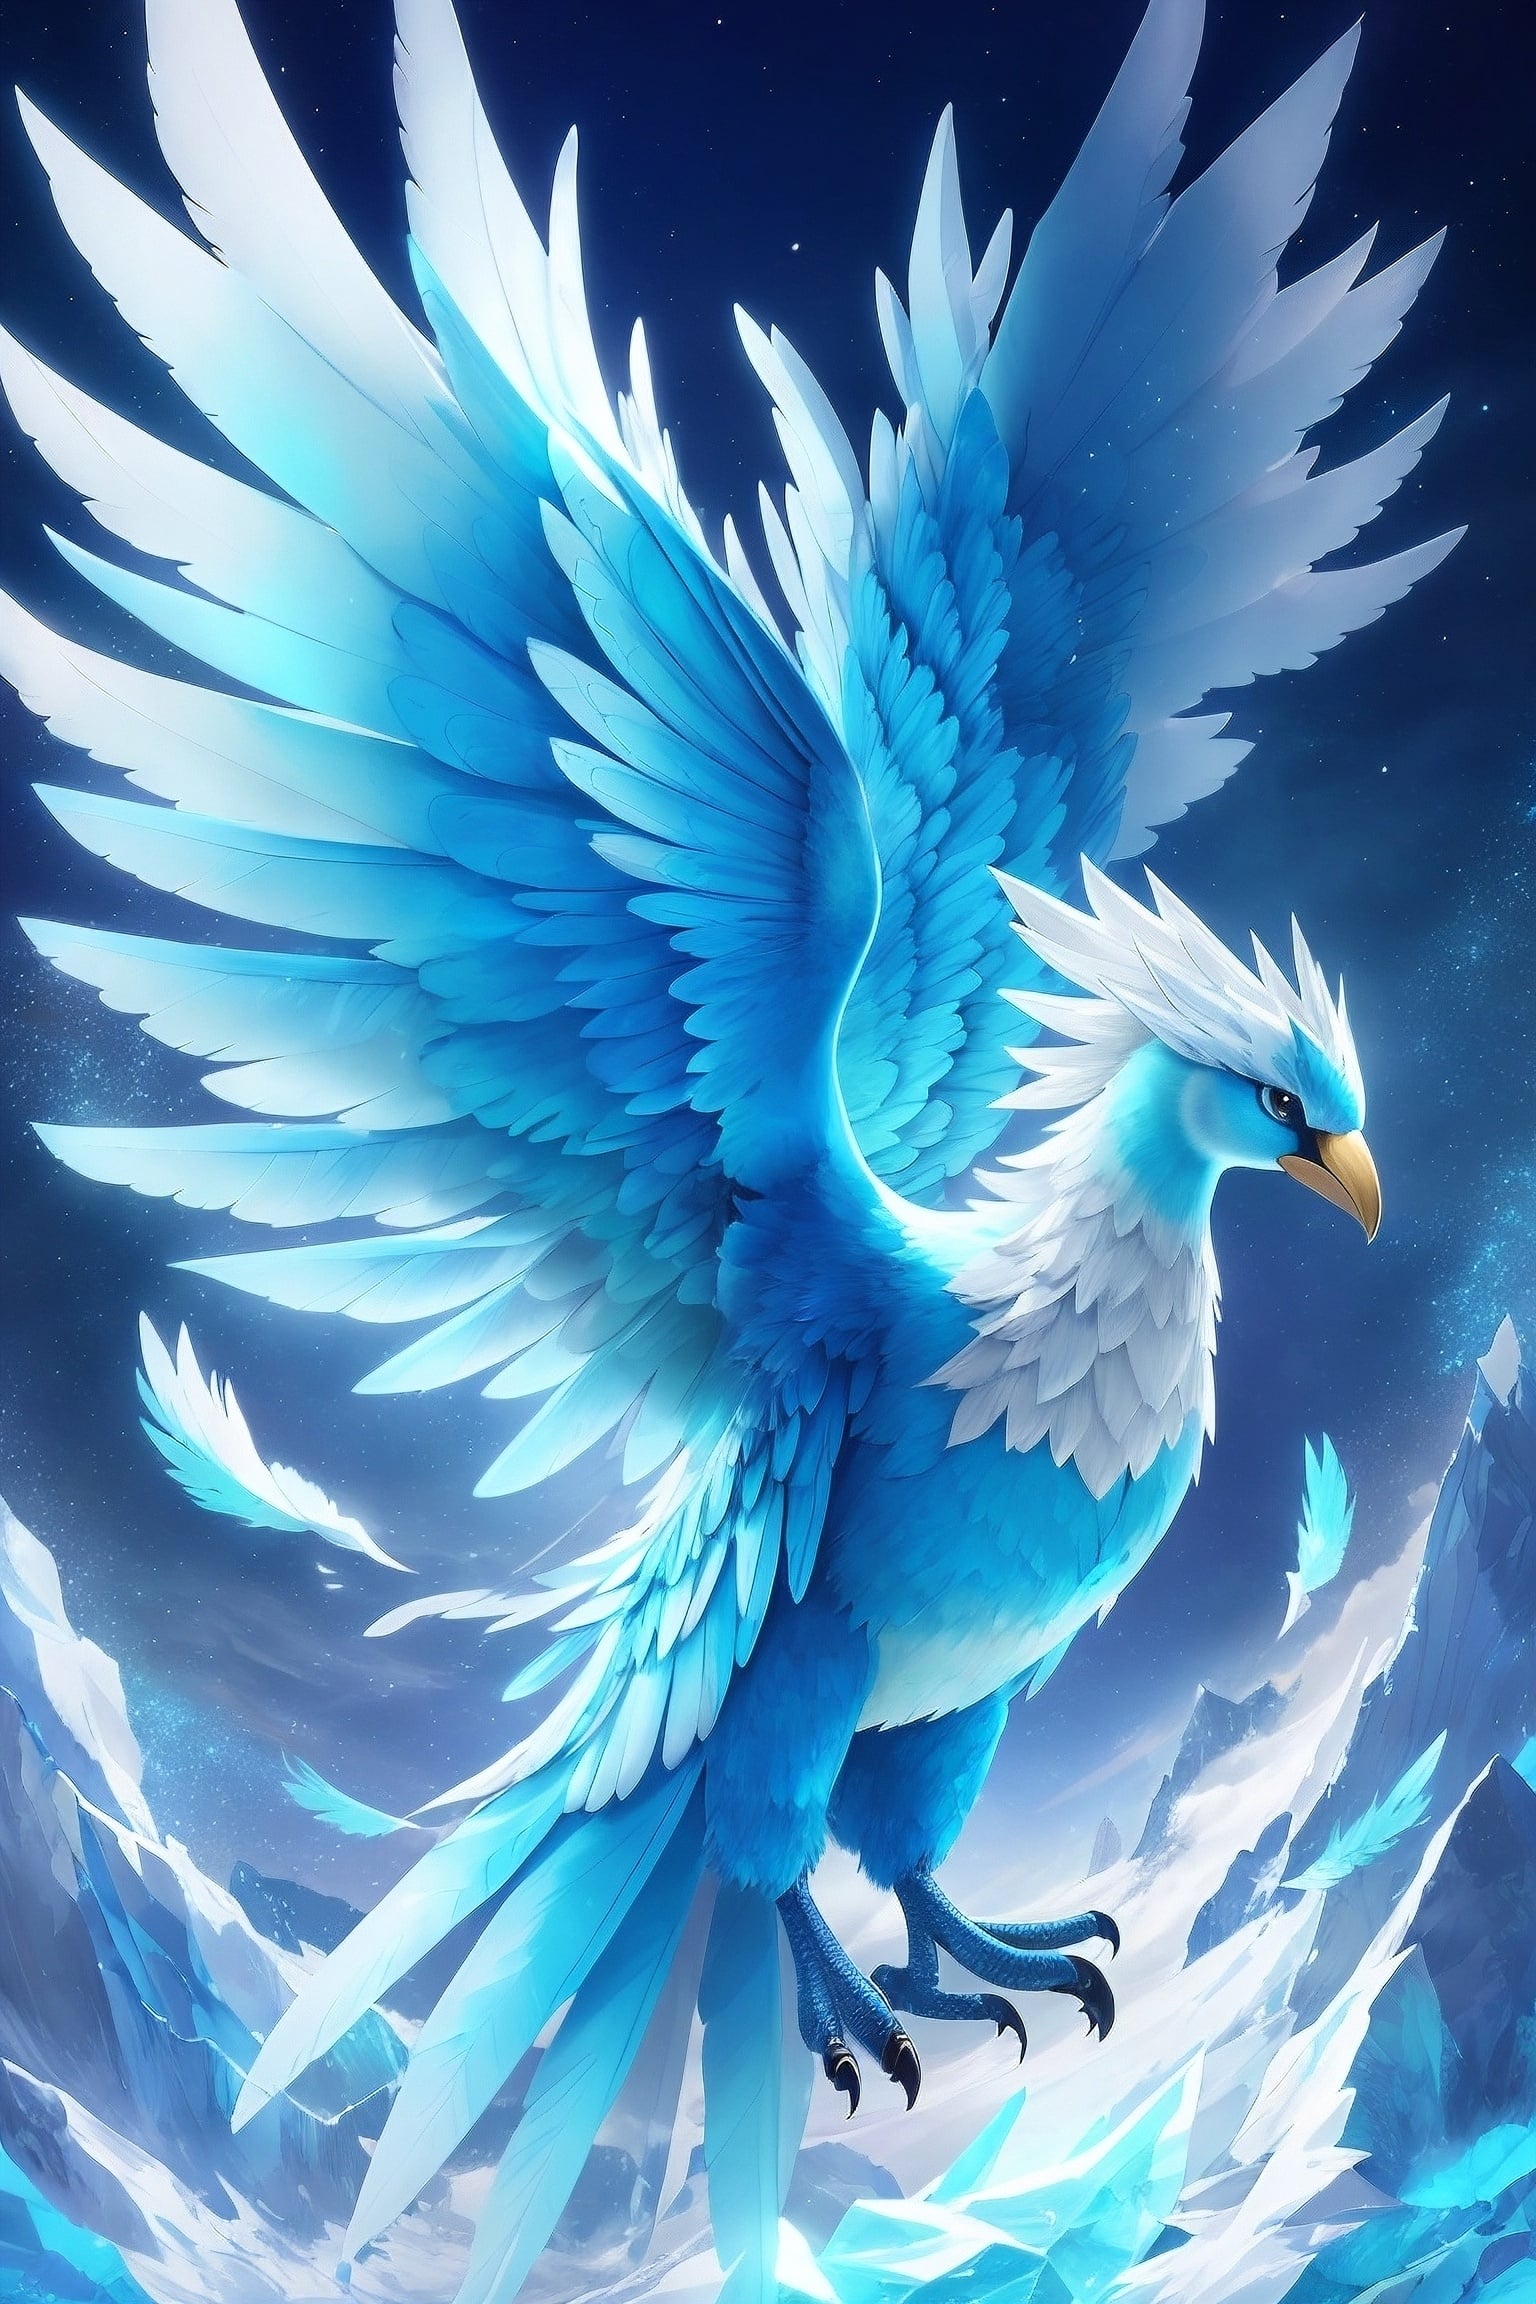 Dreamworld unveiled bird